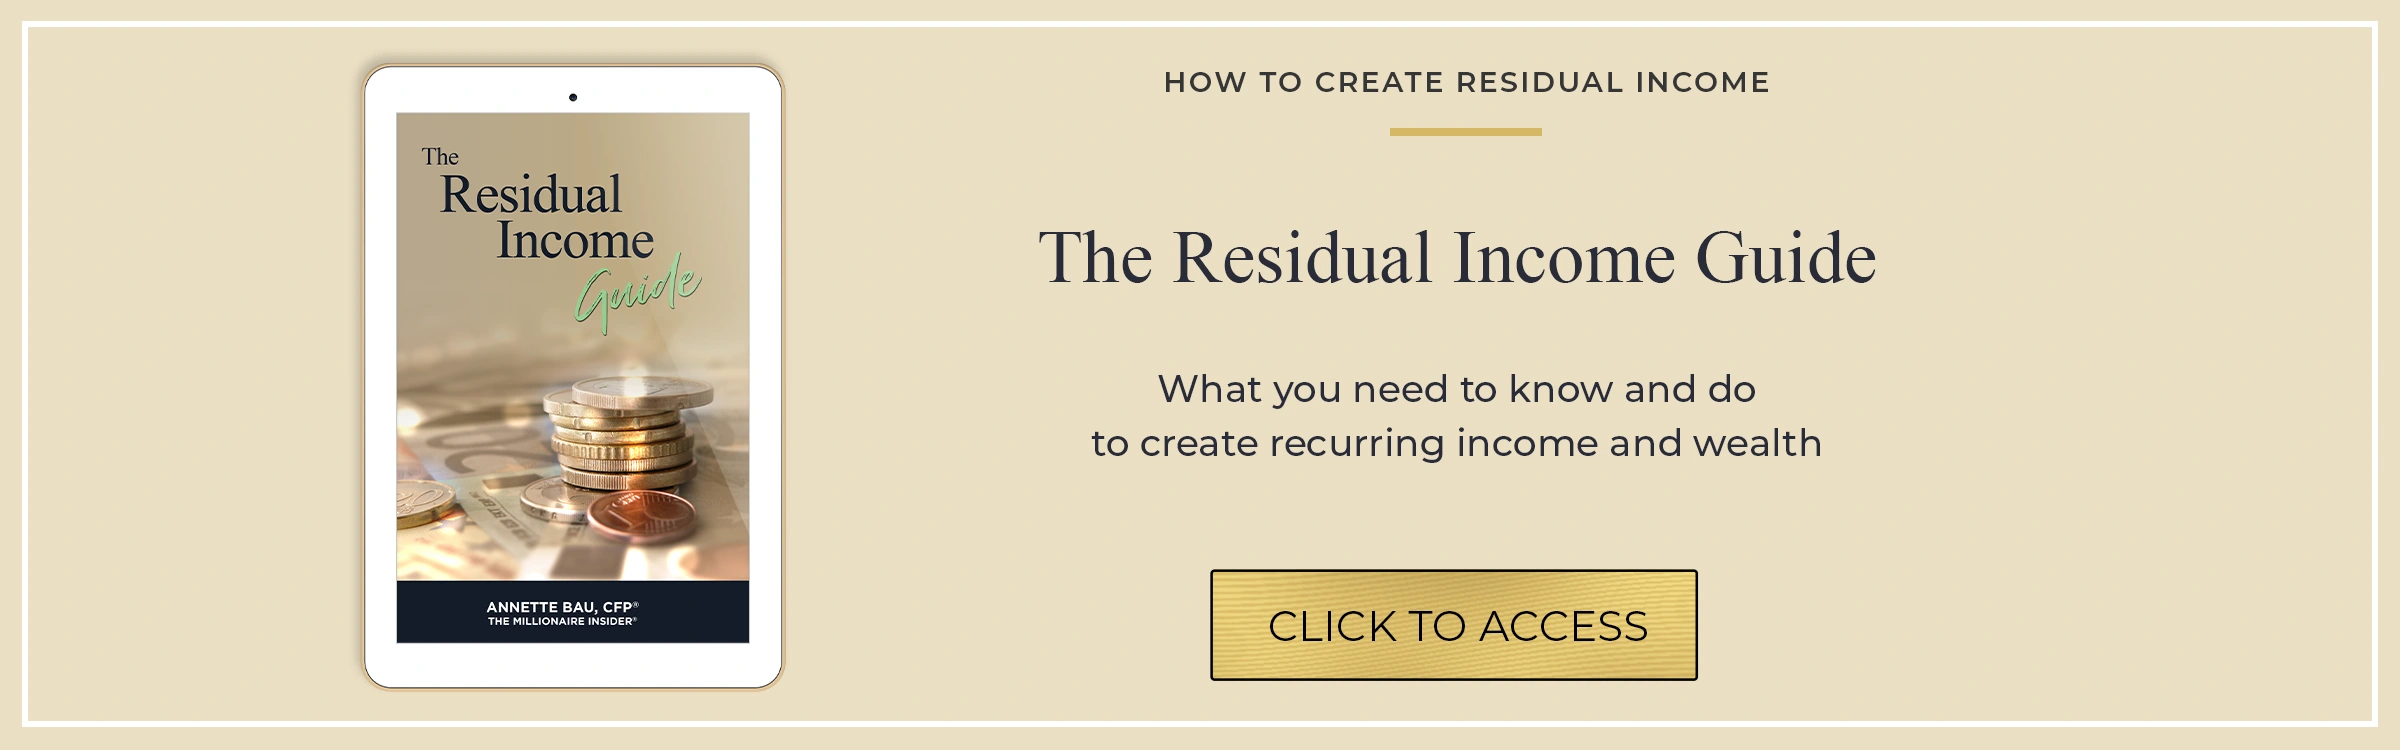 Residual Income Guide